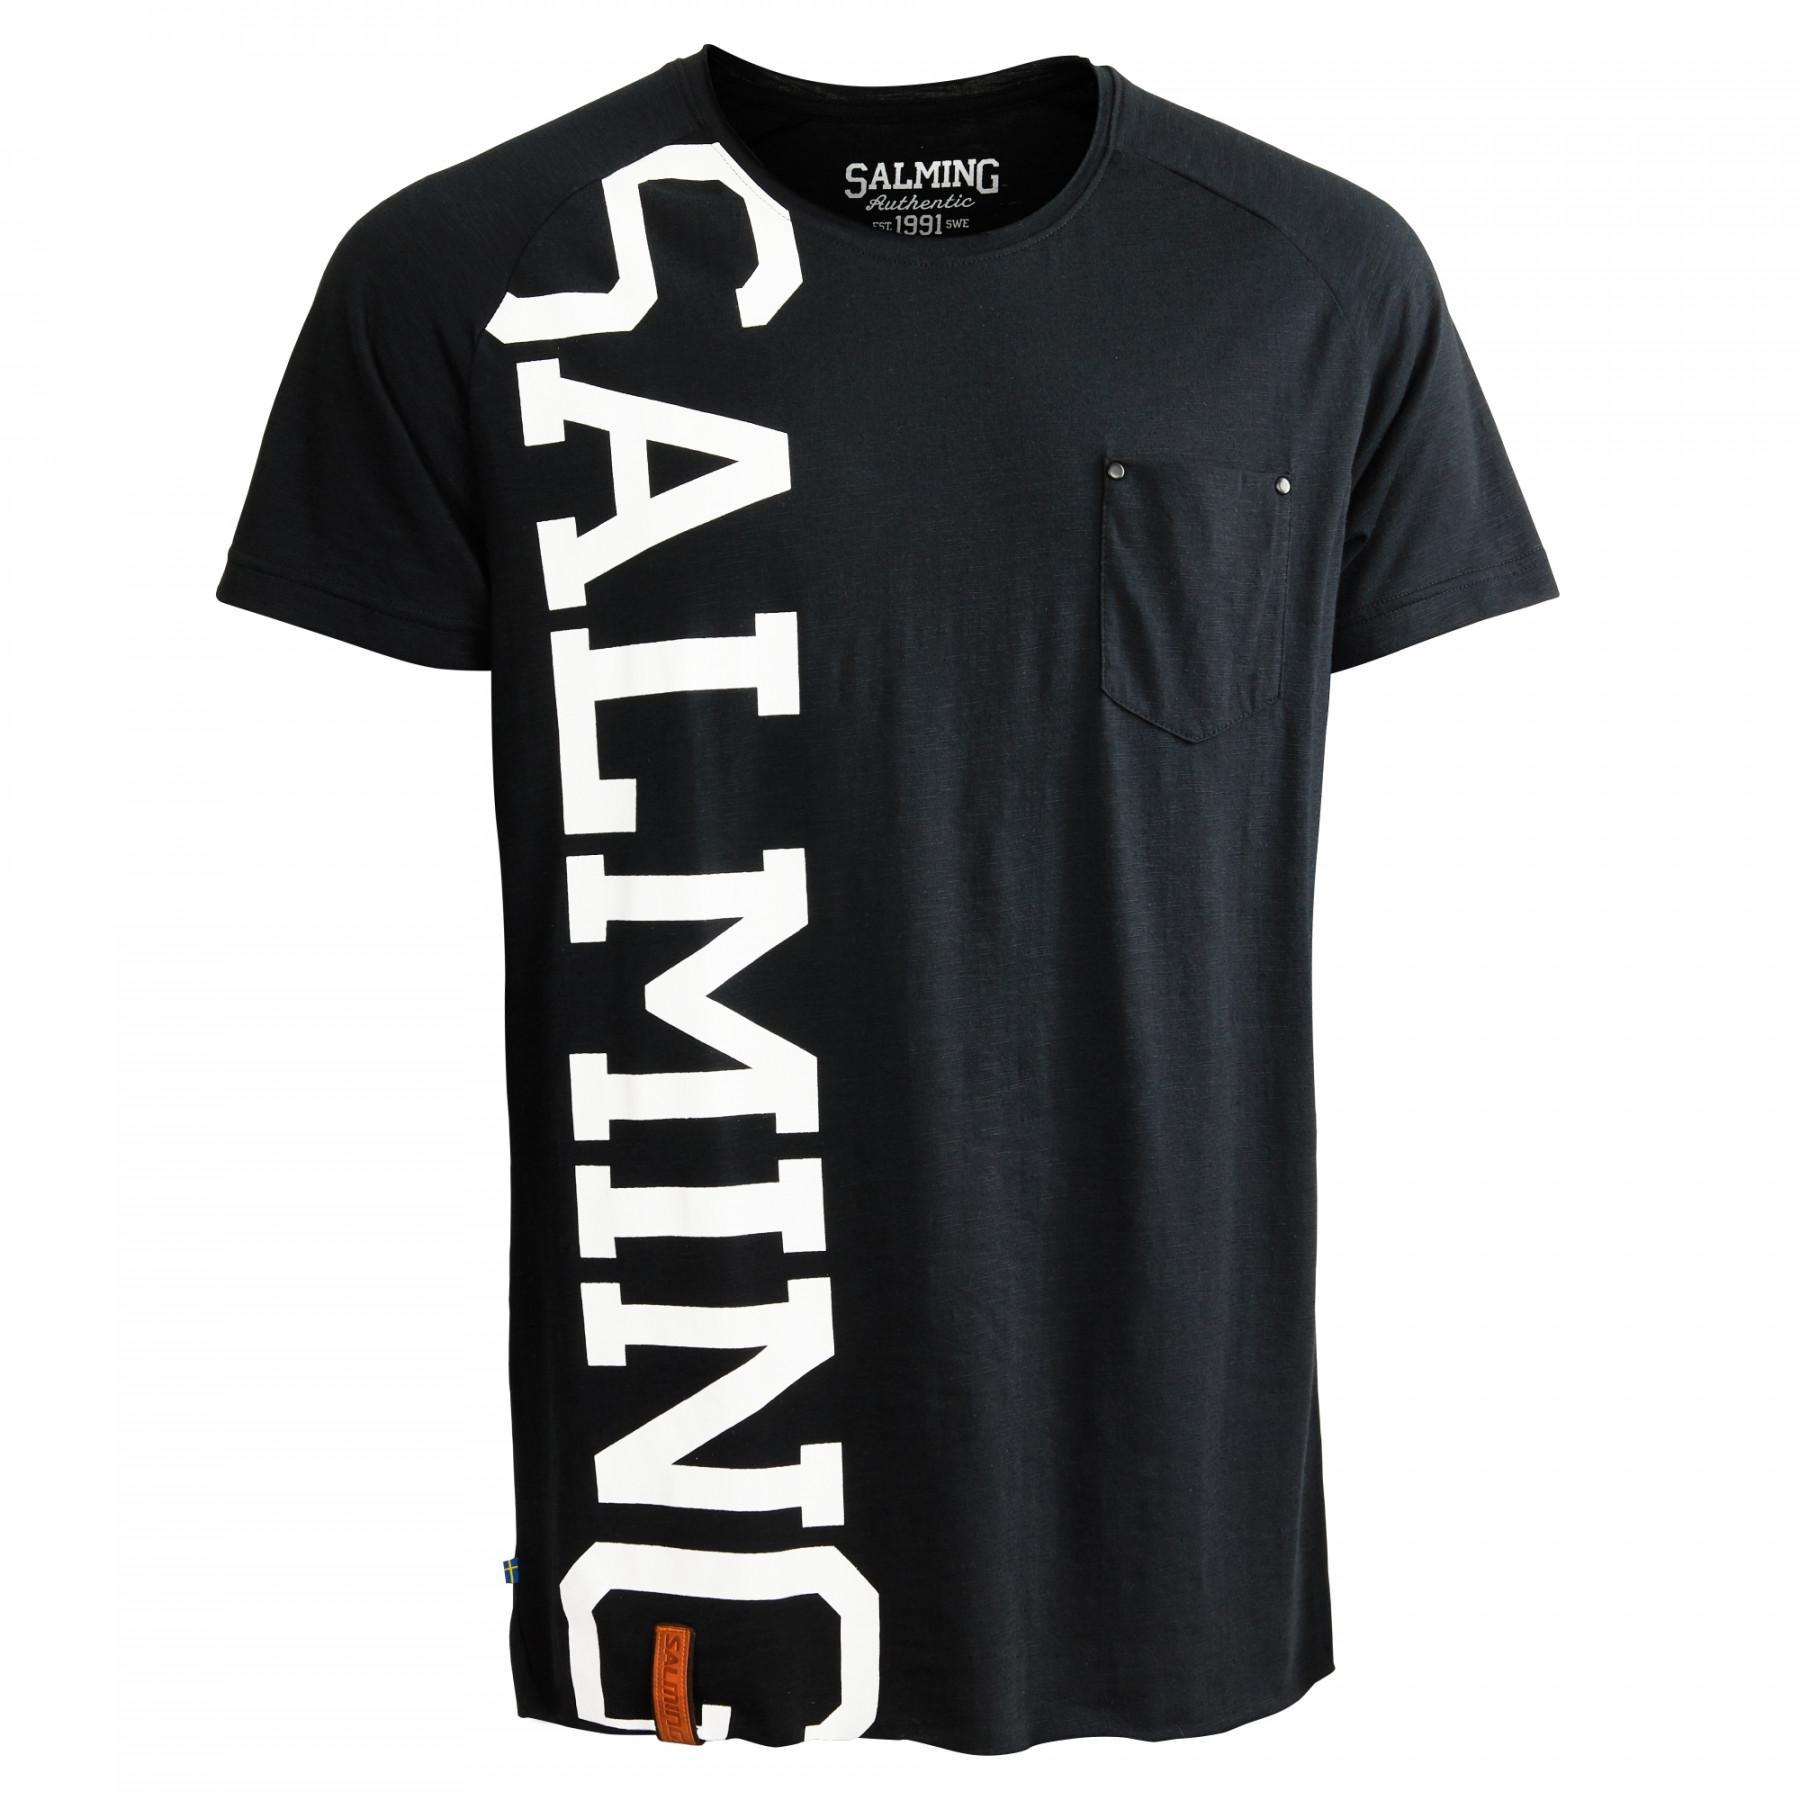 Camiseta Salming Edge